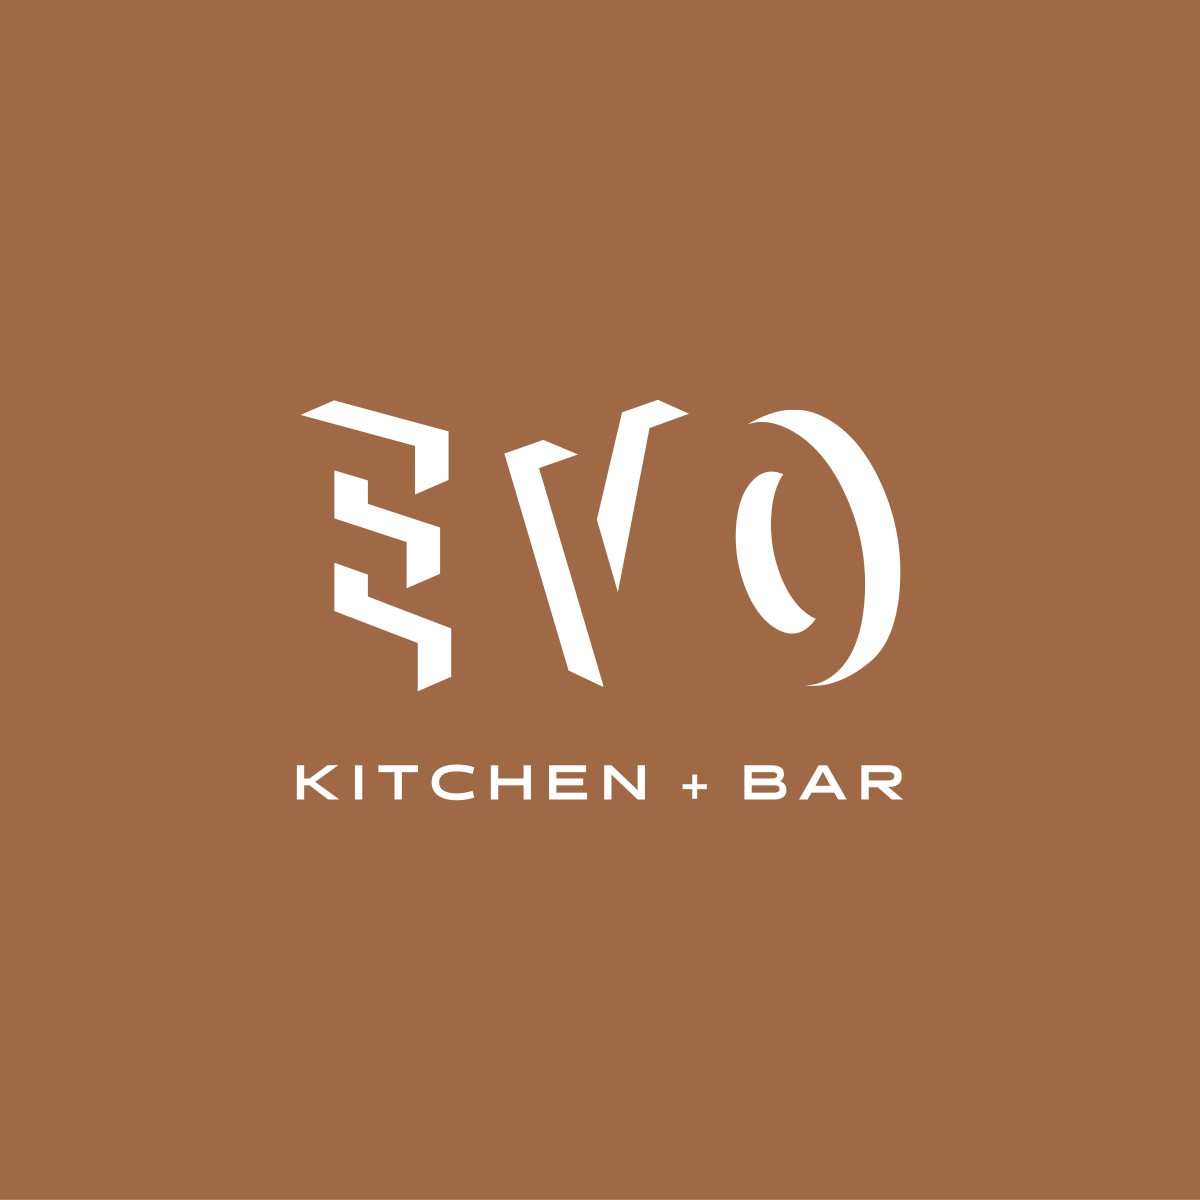 Evo Kitchen + Bar 443 Fore Street